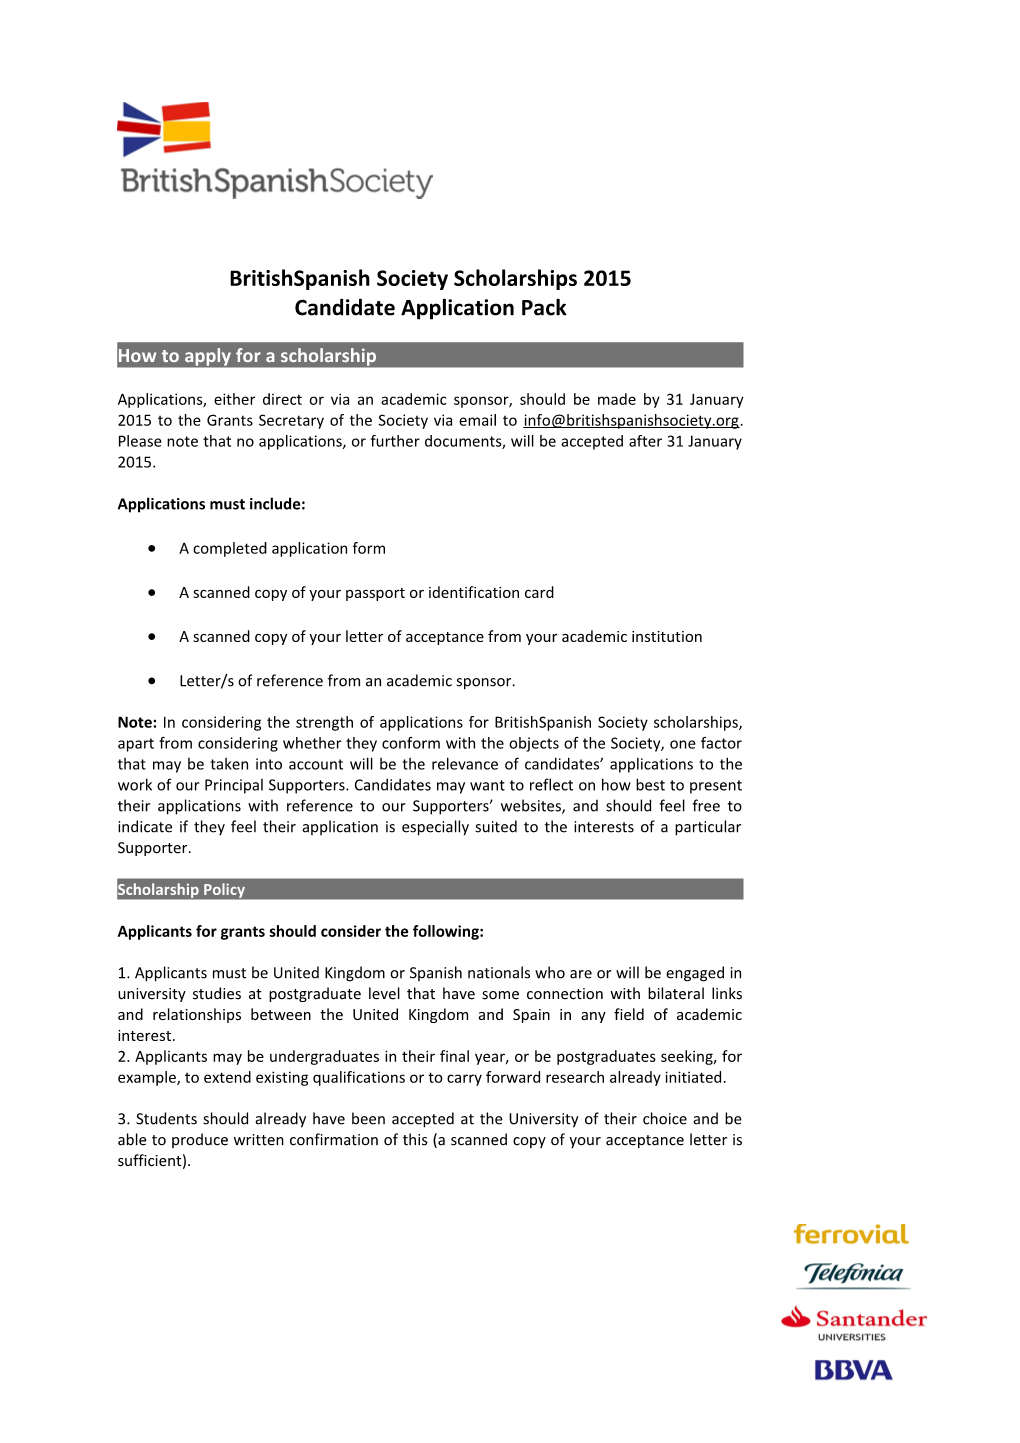 The Britishspanish Society Scholarships 2014